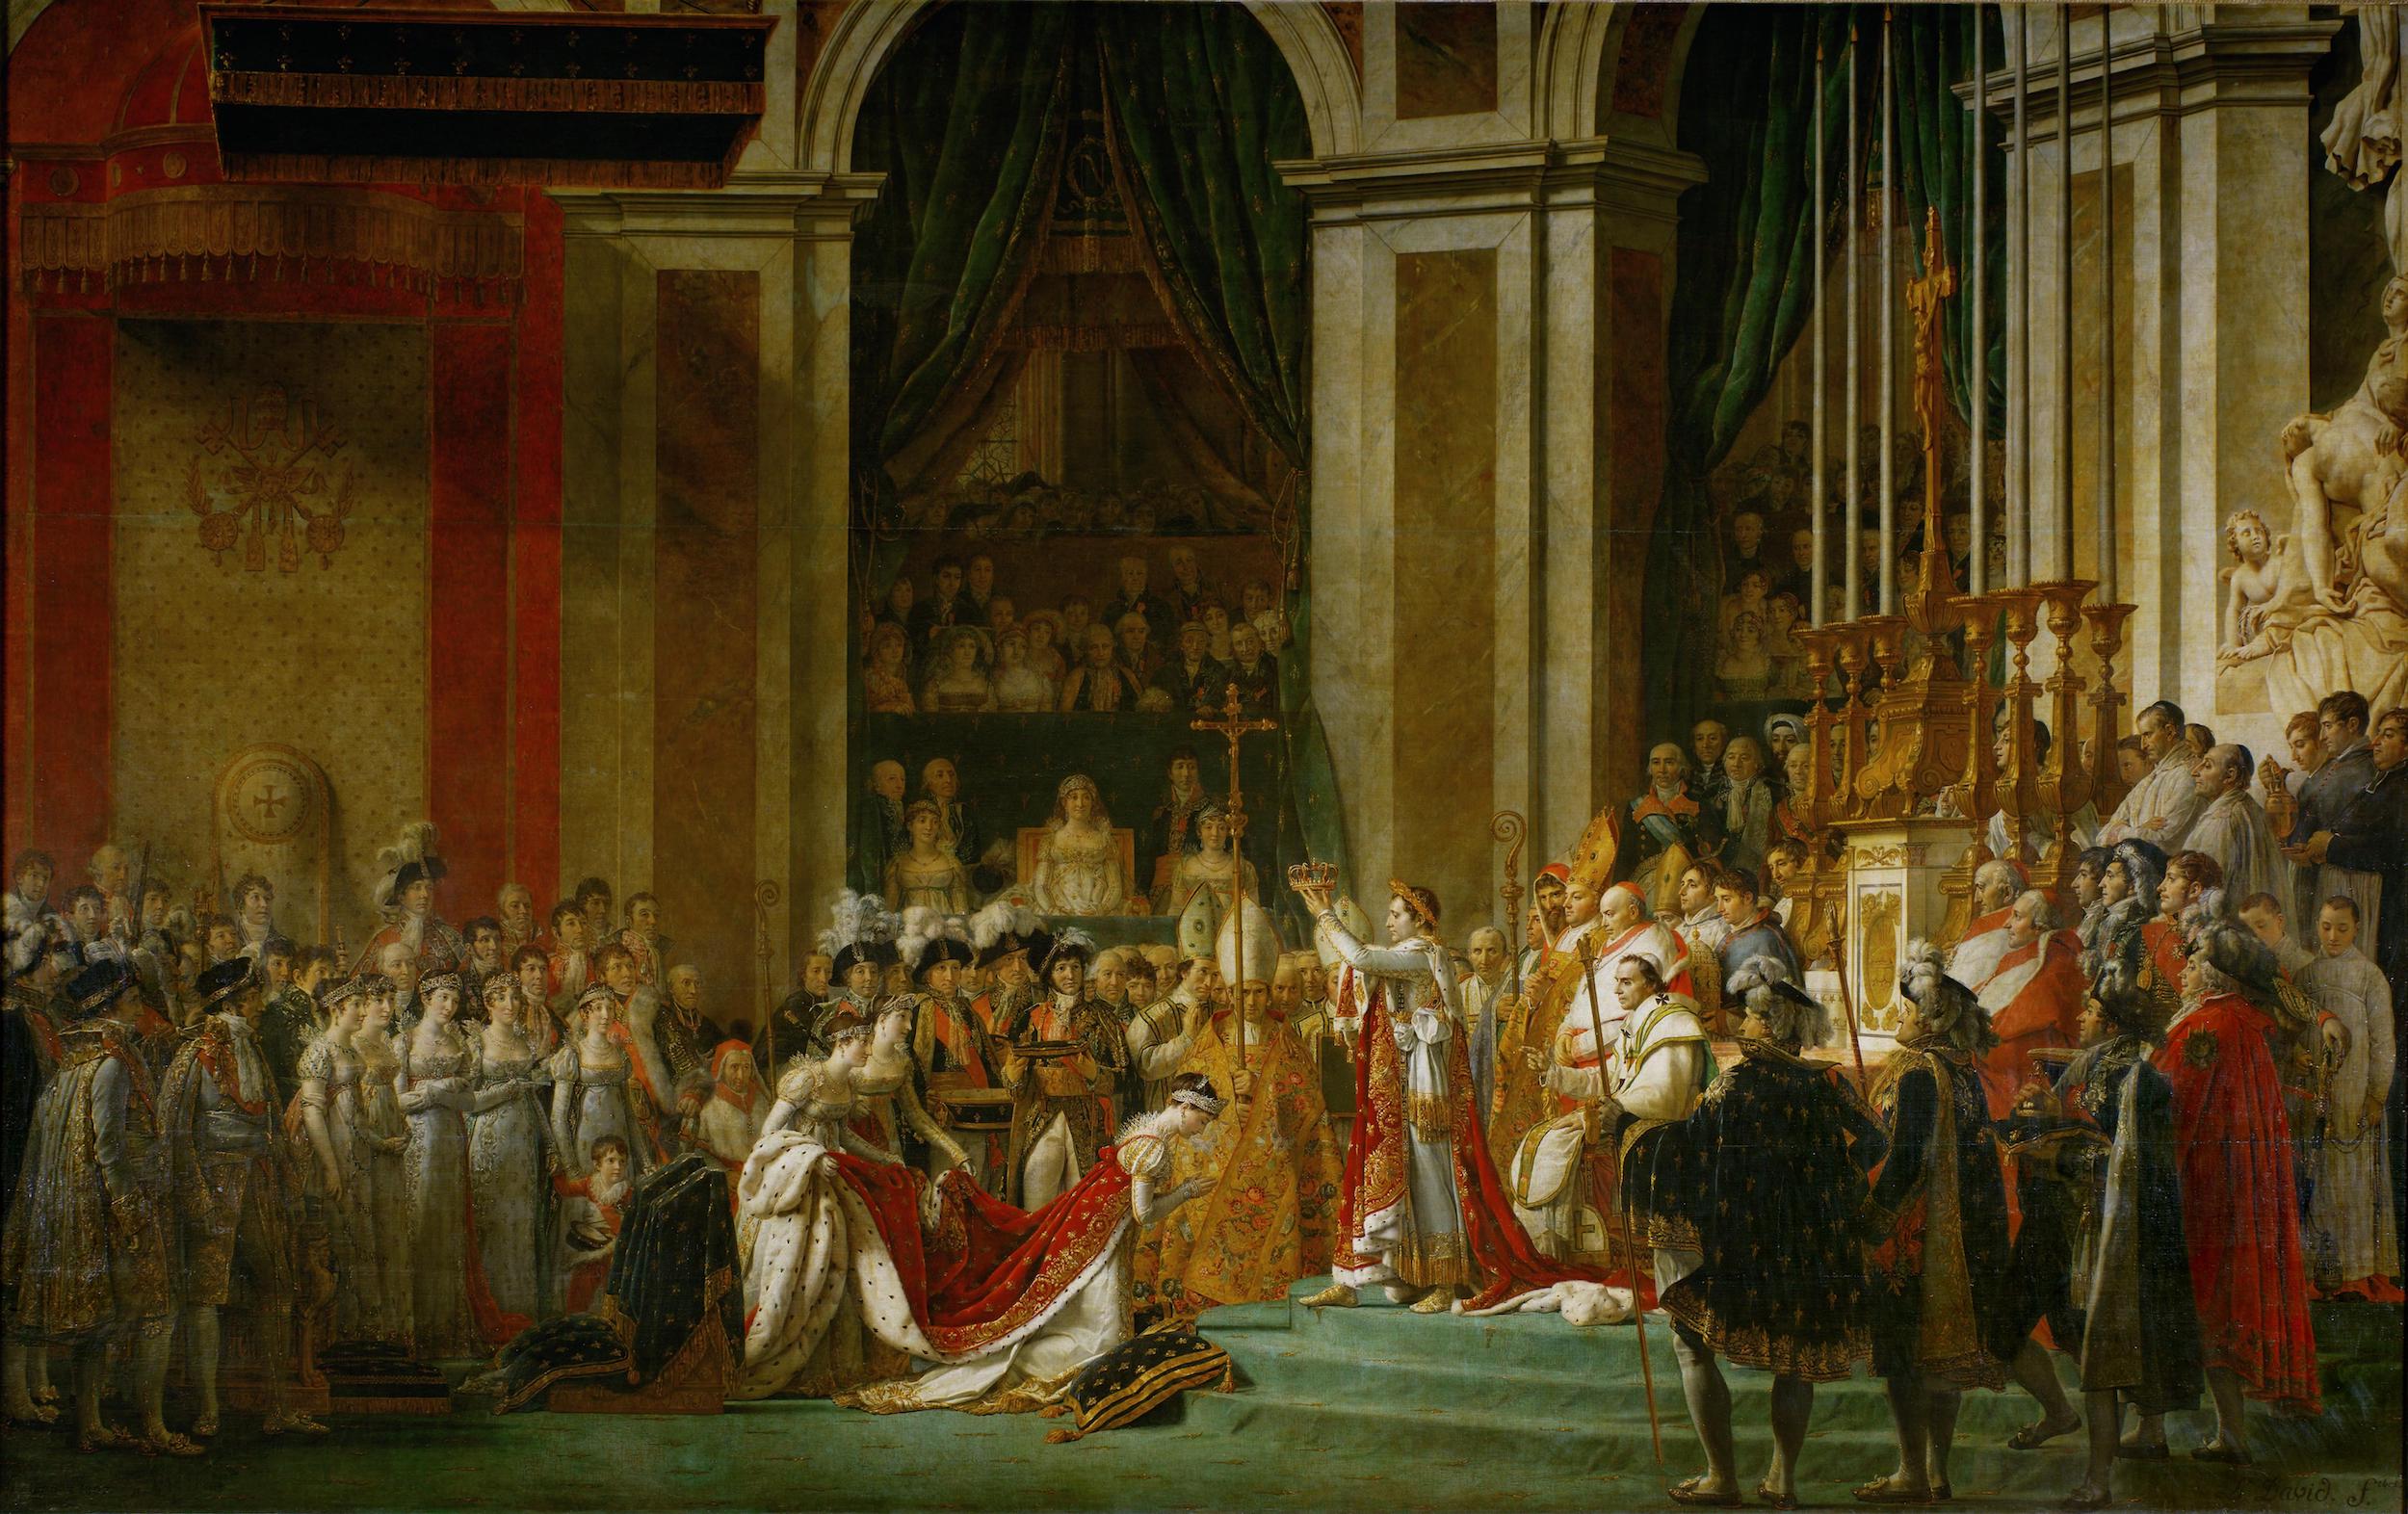 İmparator I. Napolyon'un Taç Giyme Töreni ve İmparatoriçe Joséphine'in Taçlanması by Jacques-Louis David - 1806-1807 - 6,21 x 9.79 m Musée du Louvre